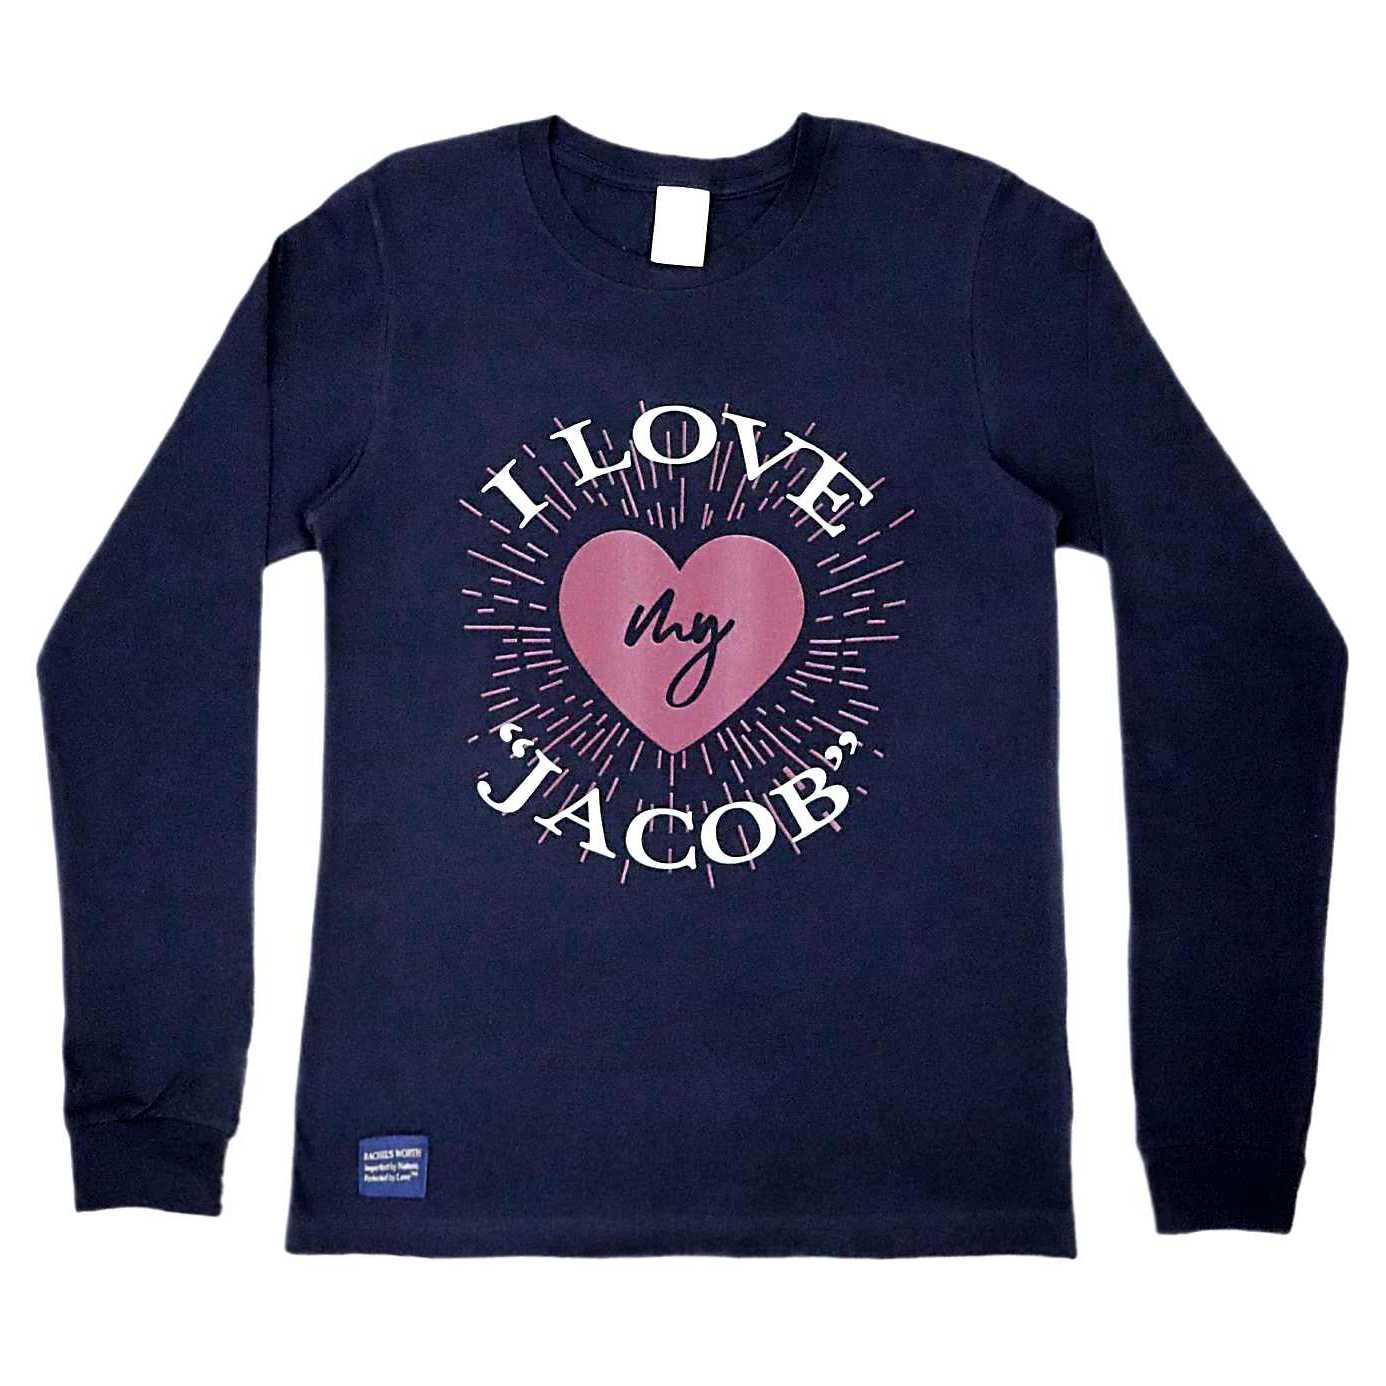 I Love My "Jacob" Sparks Navy Long Sleeve T-Shirt